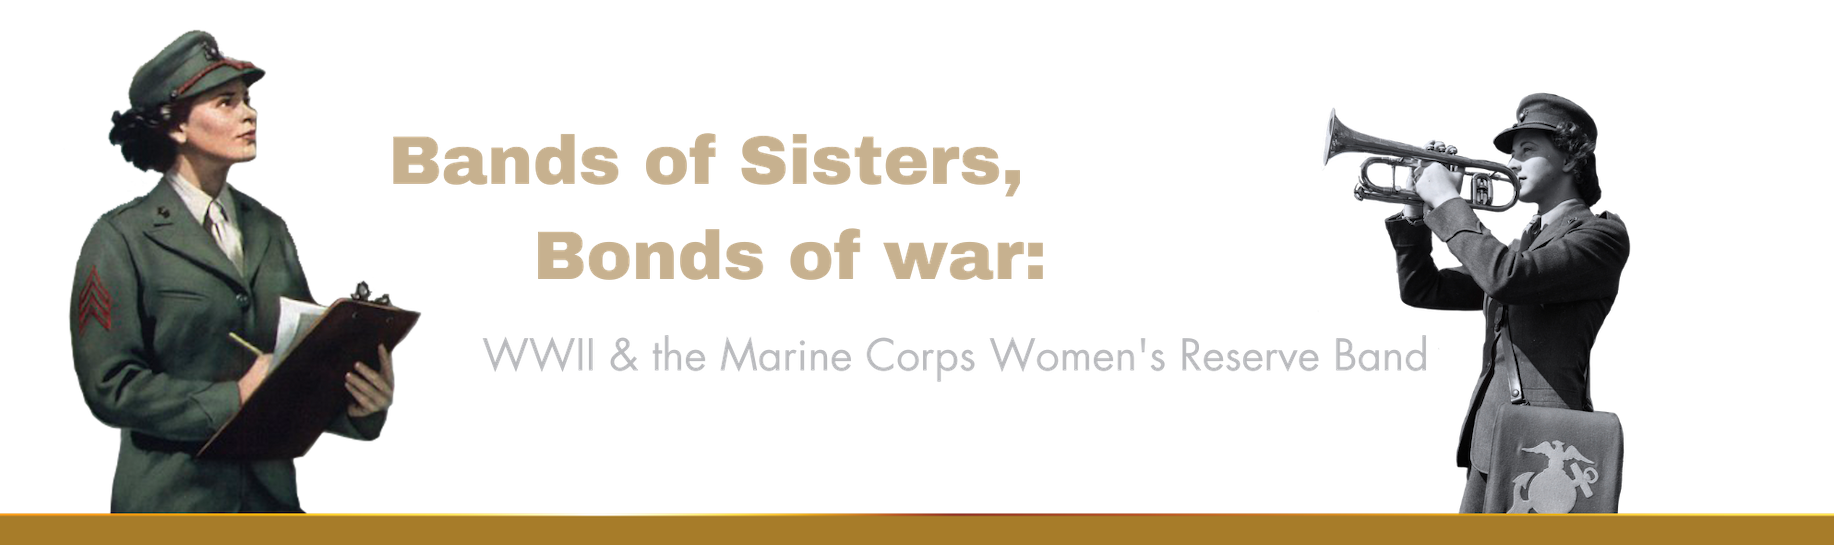 World War II: Marine Corps Women's Reserve Band